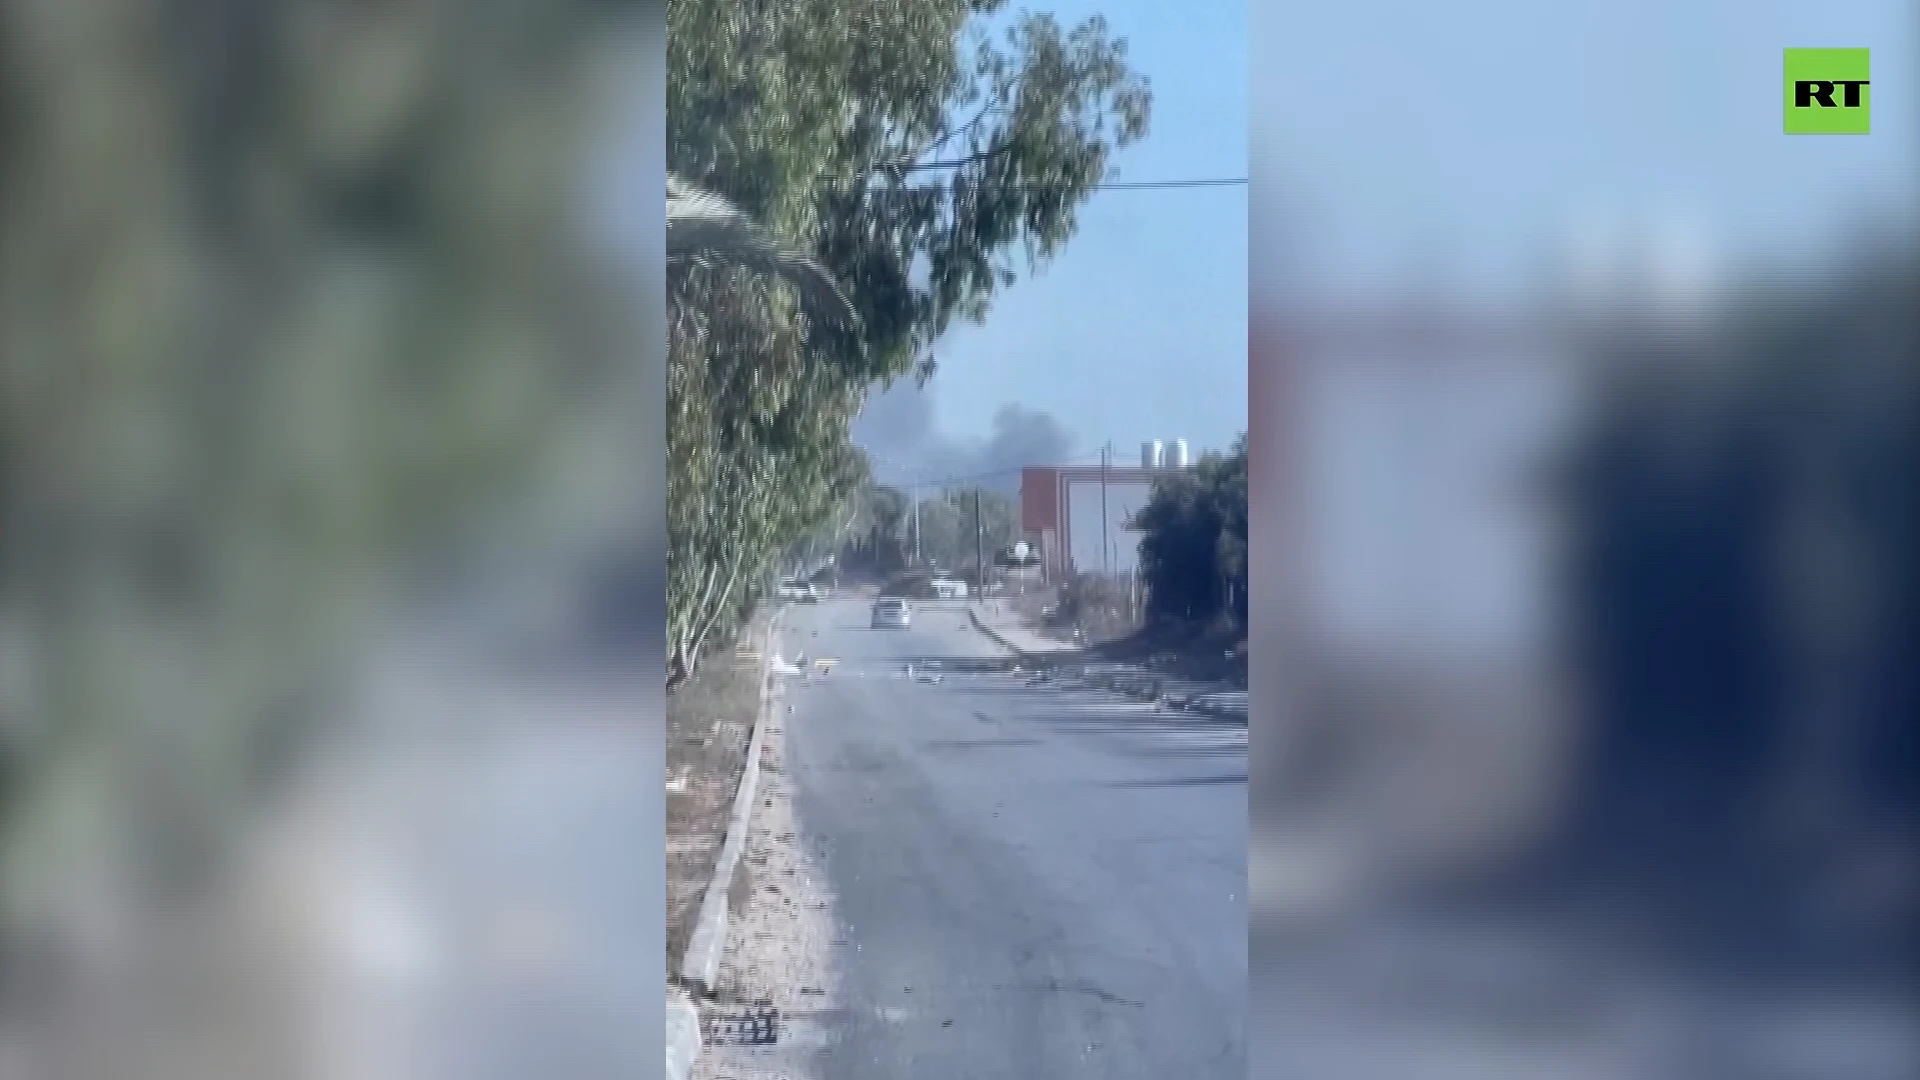 Tank fires at car in Gaza